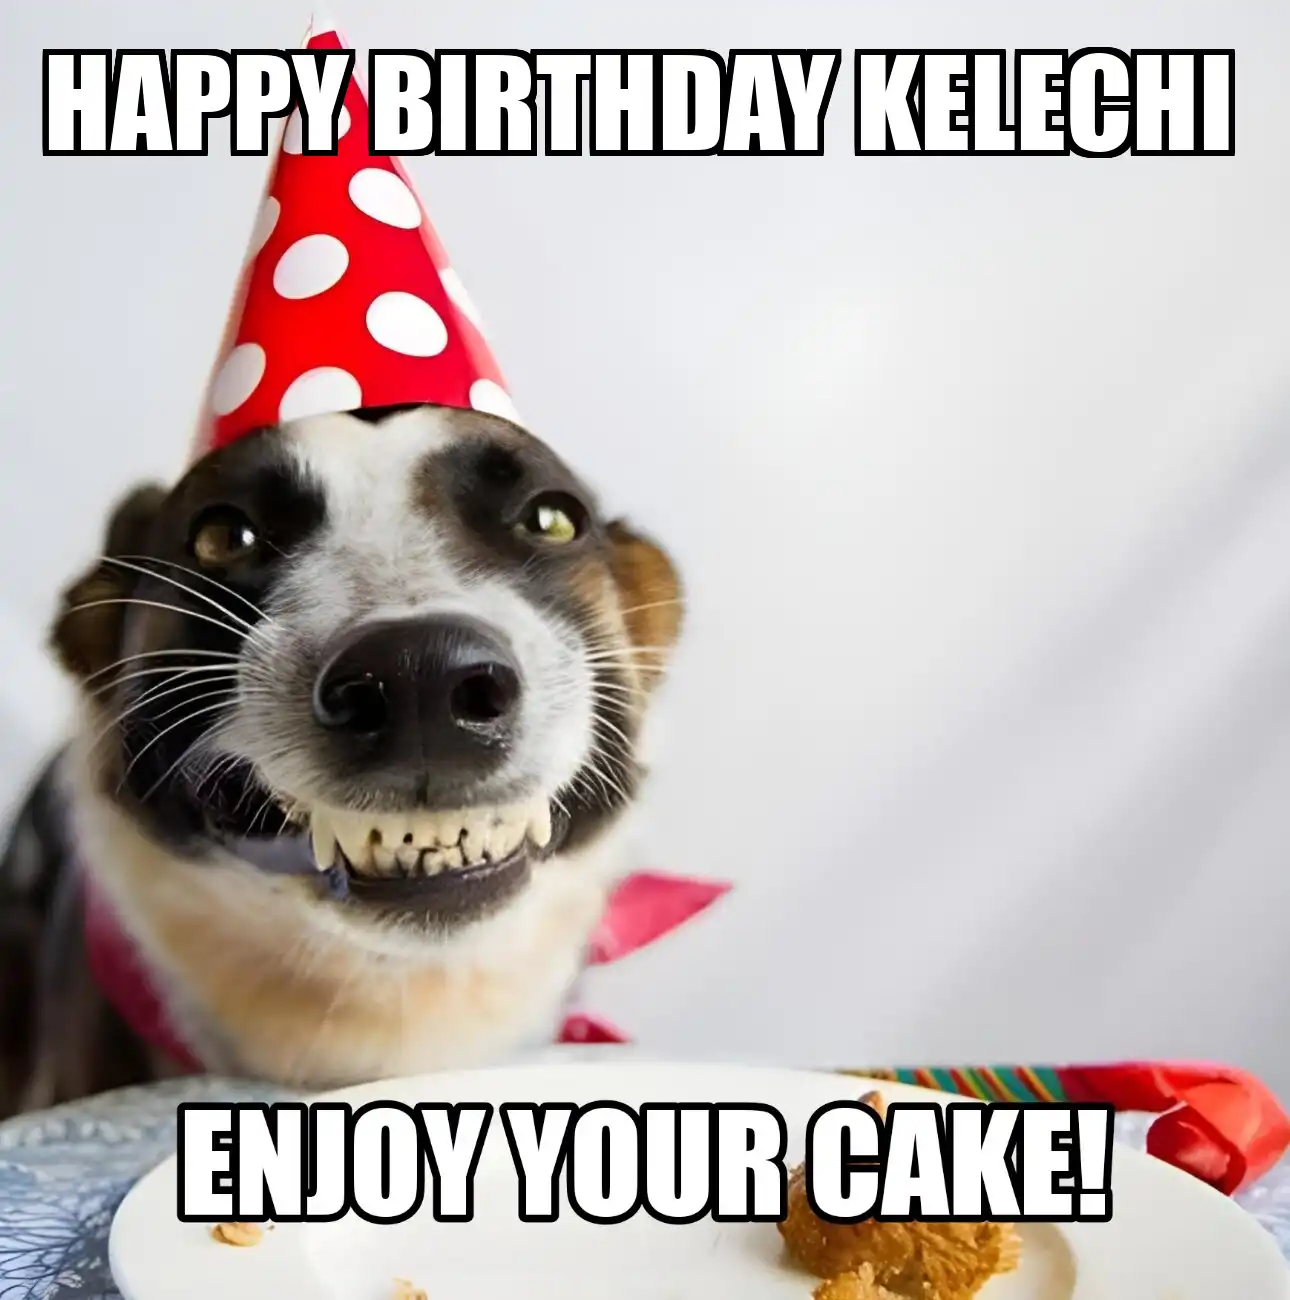 Happy Birthday Kelechi Enjoy Your Cake Dog Meme